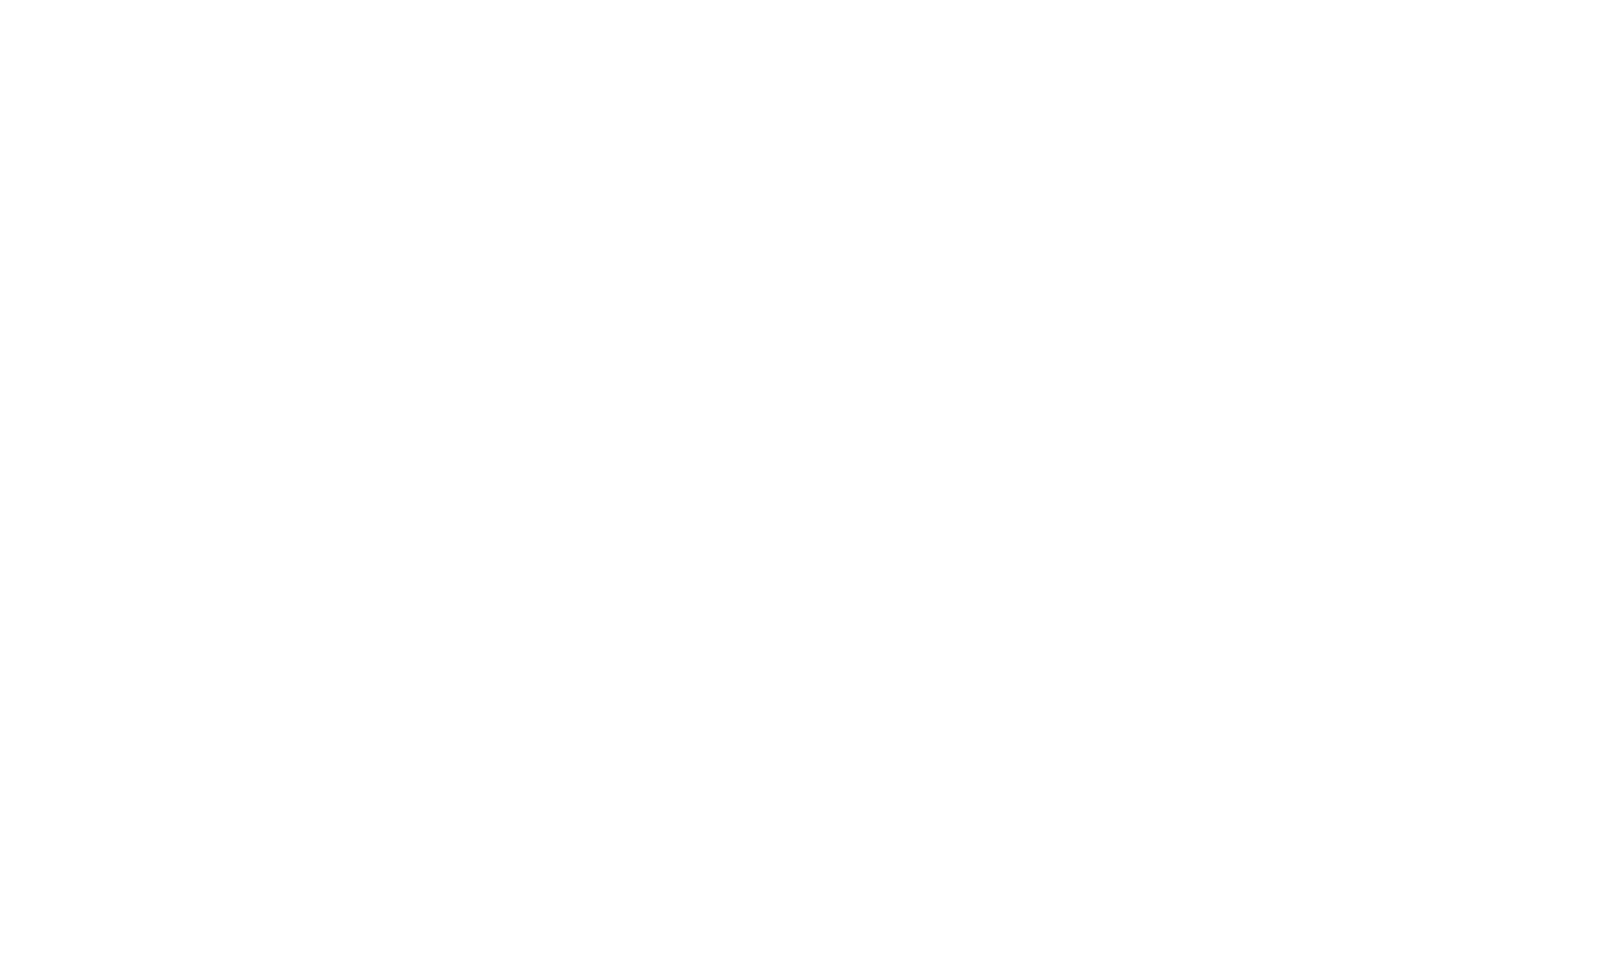 Leeds Sixth Form College